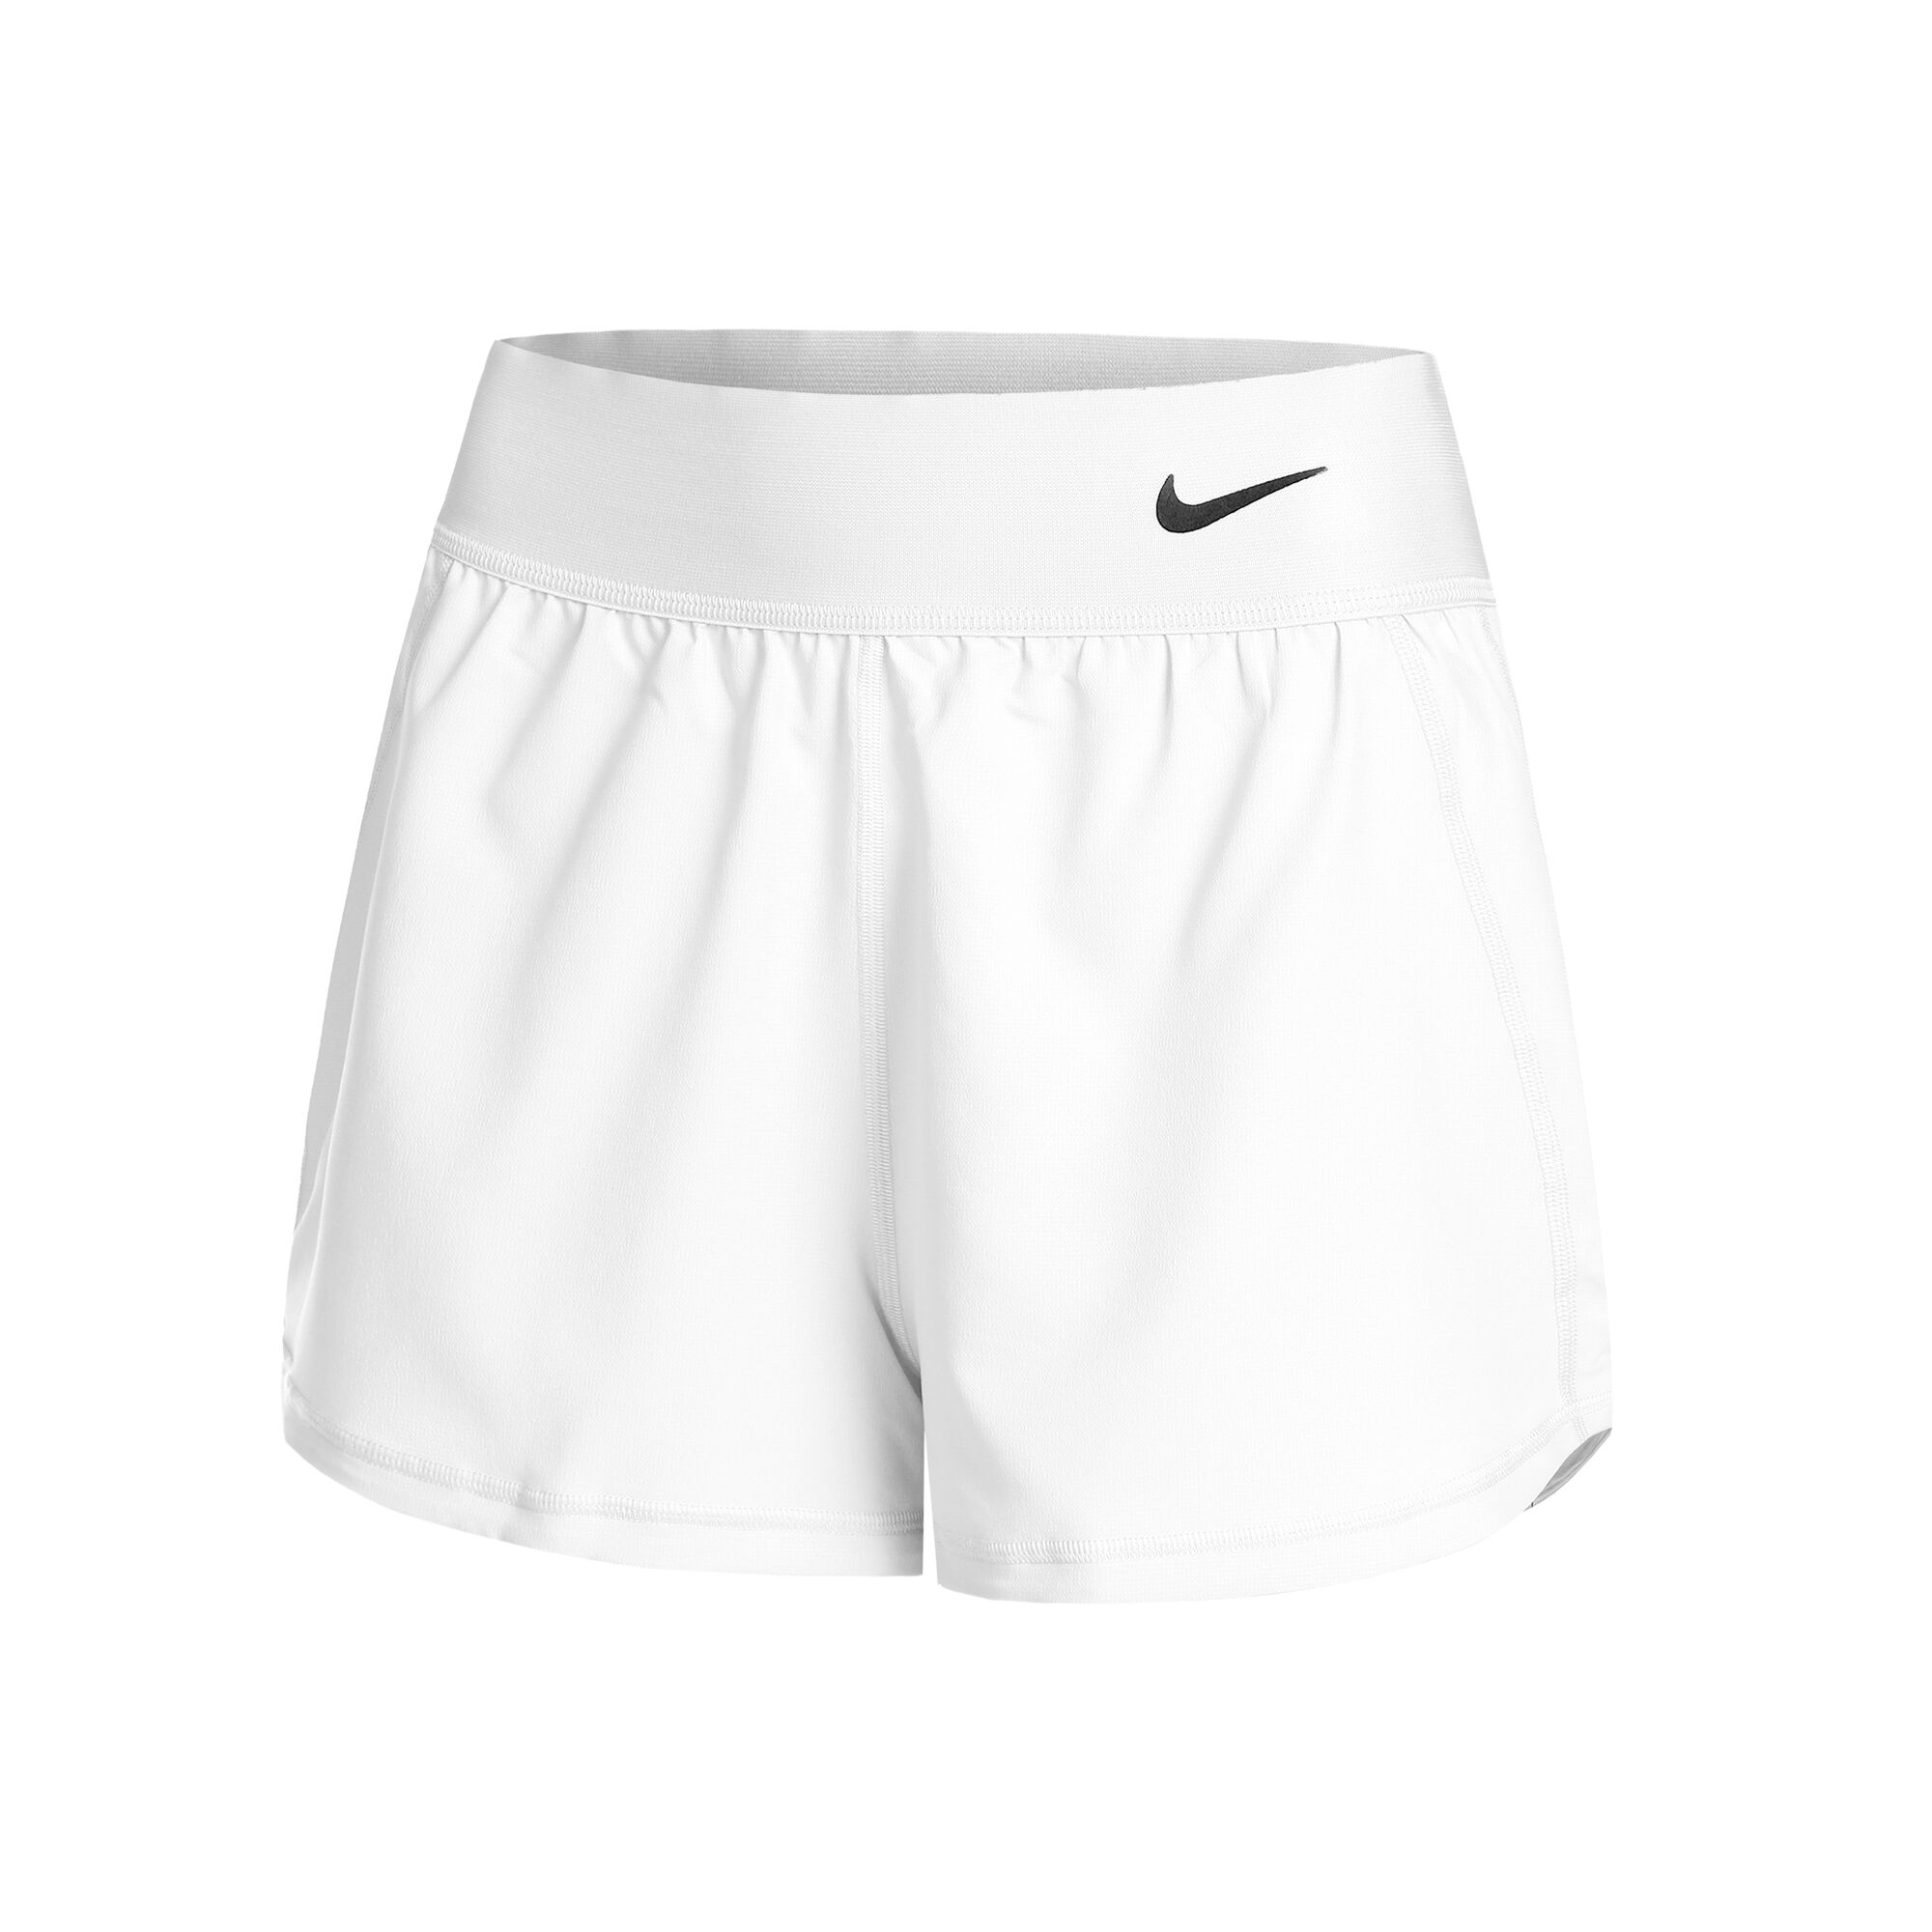 Buy Nike Dri-Fit Advantage Court Shorts Women White online